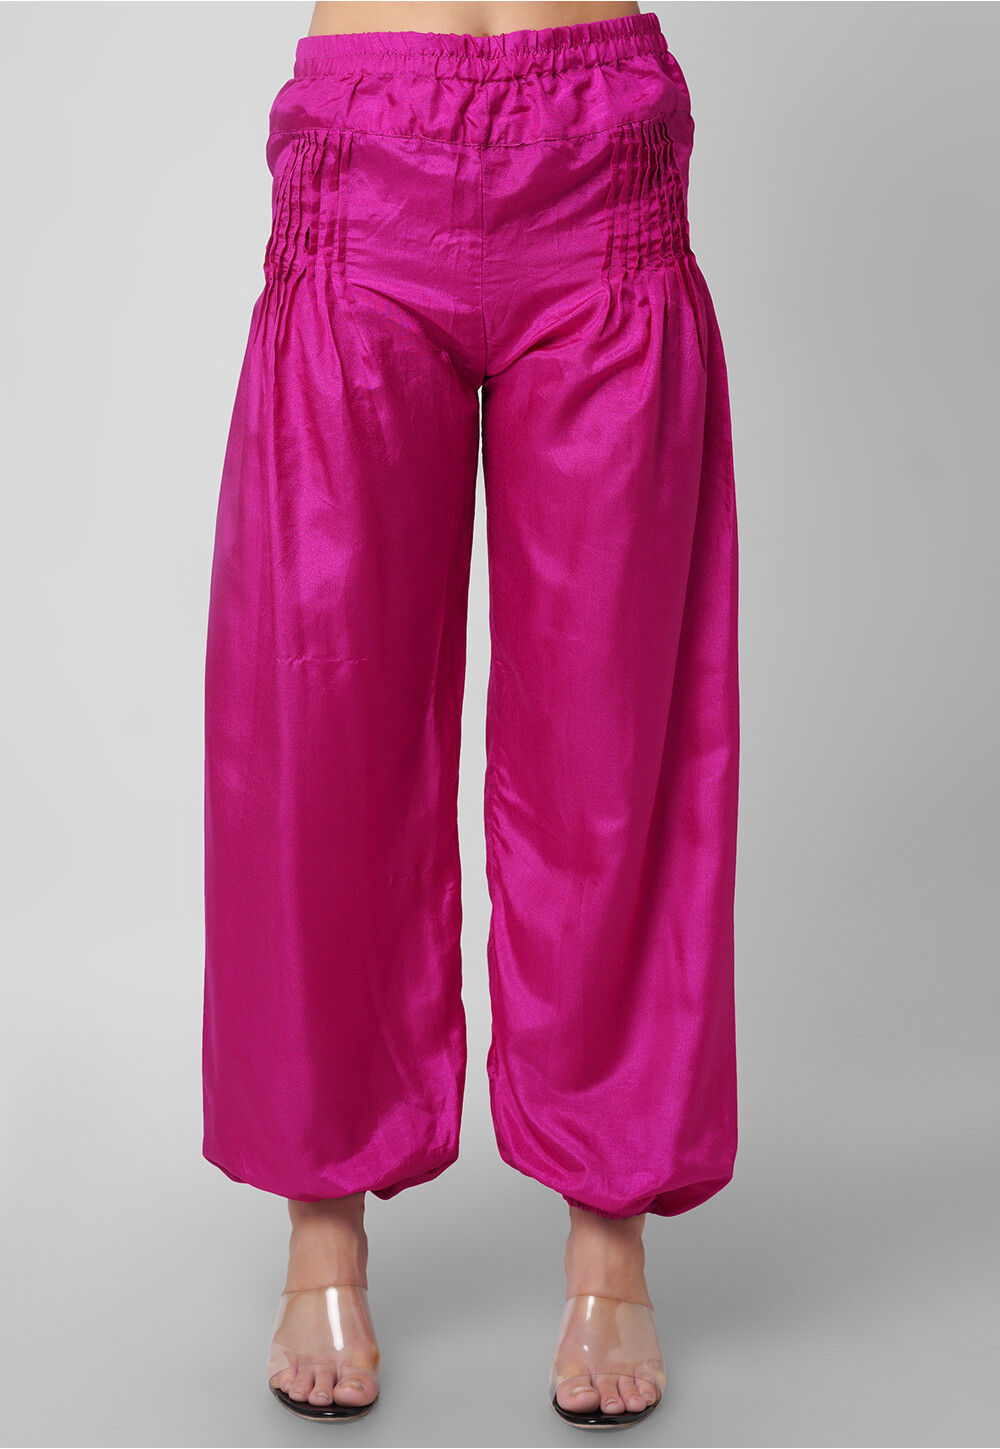 KAC Solid Color Loose Cotton Linen Casual Pants Home Harem Pants | KOODING